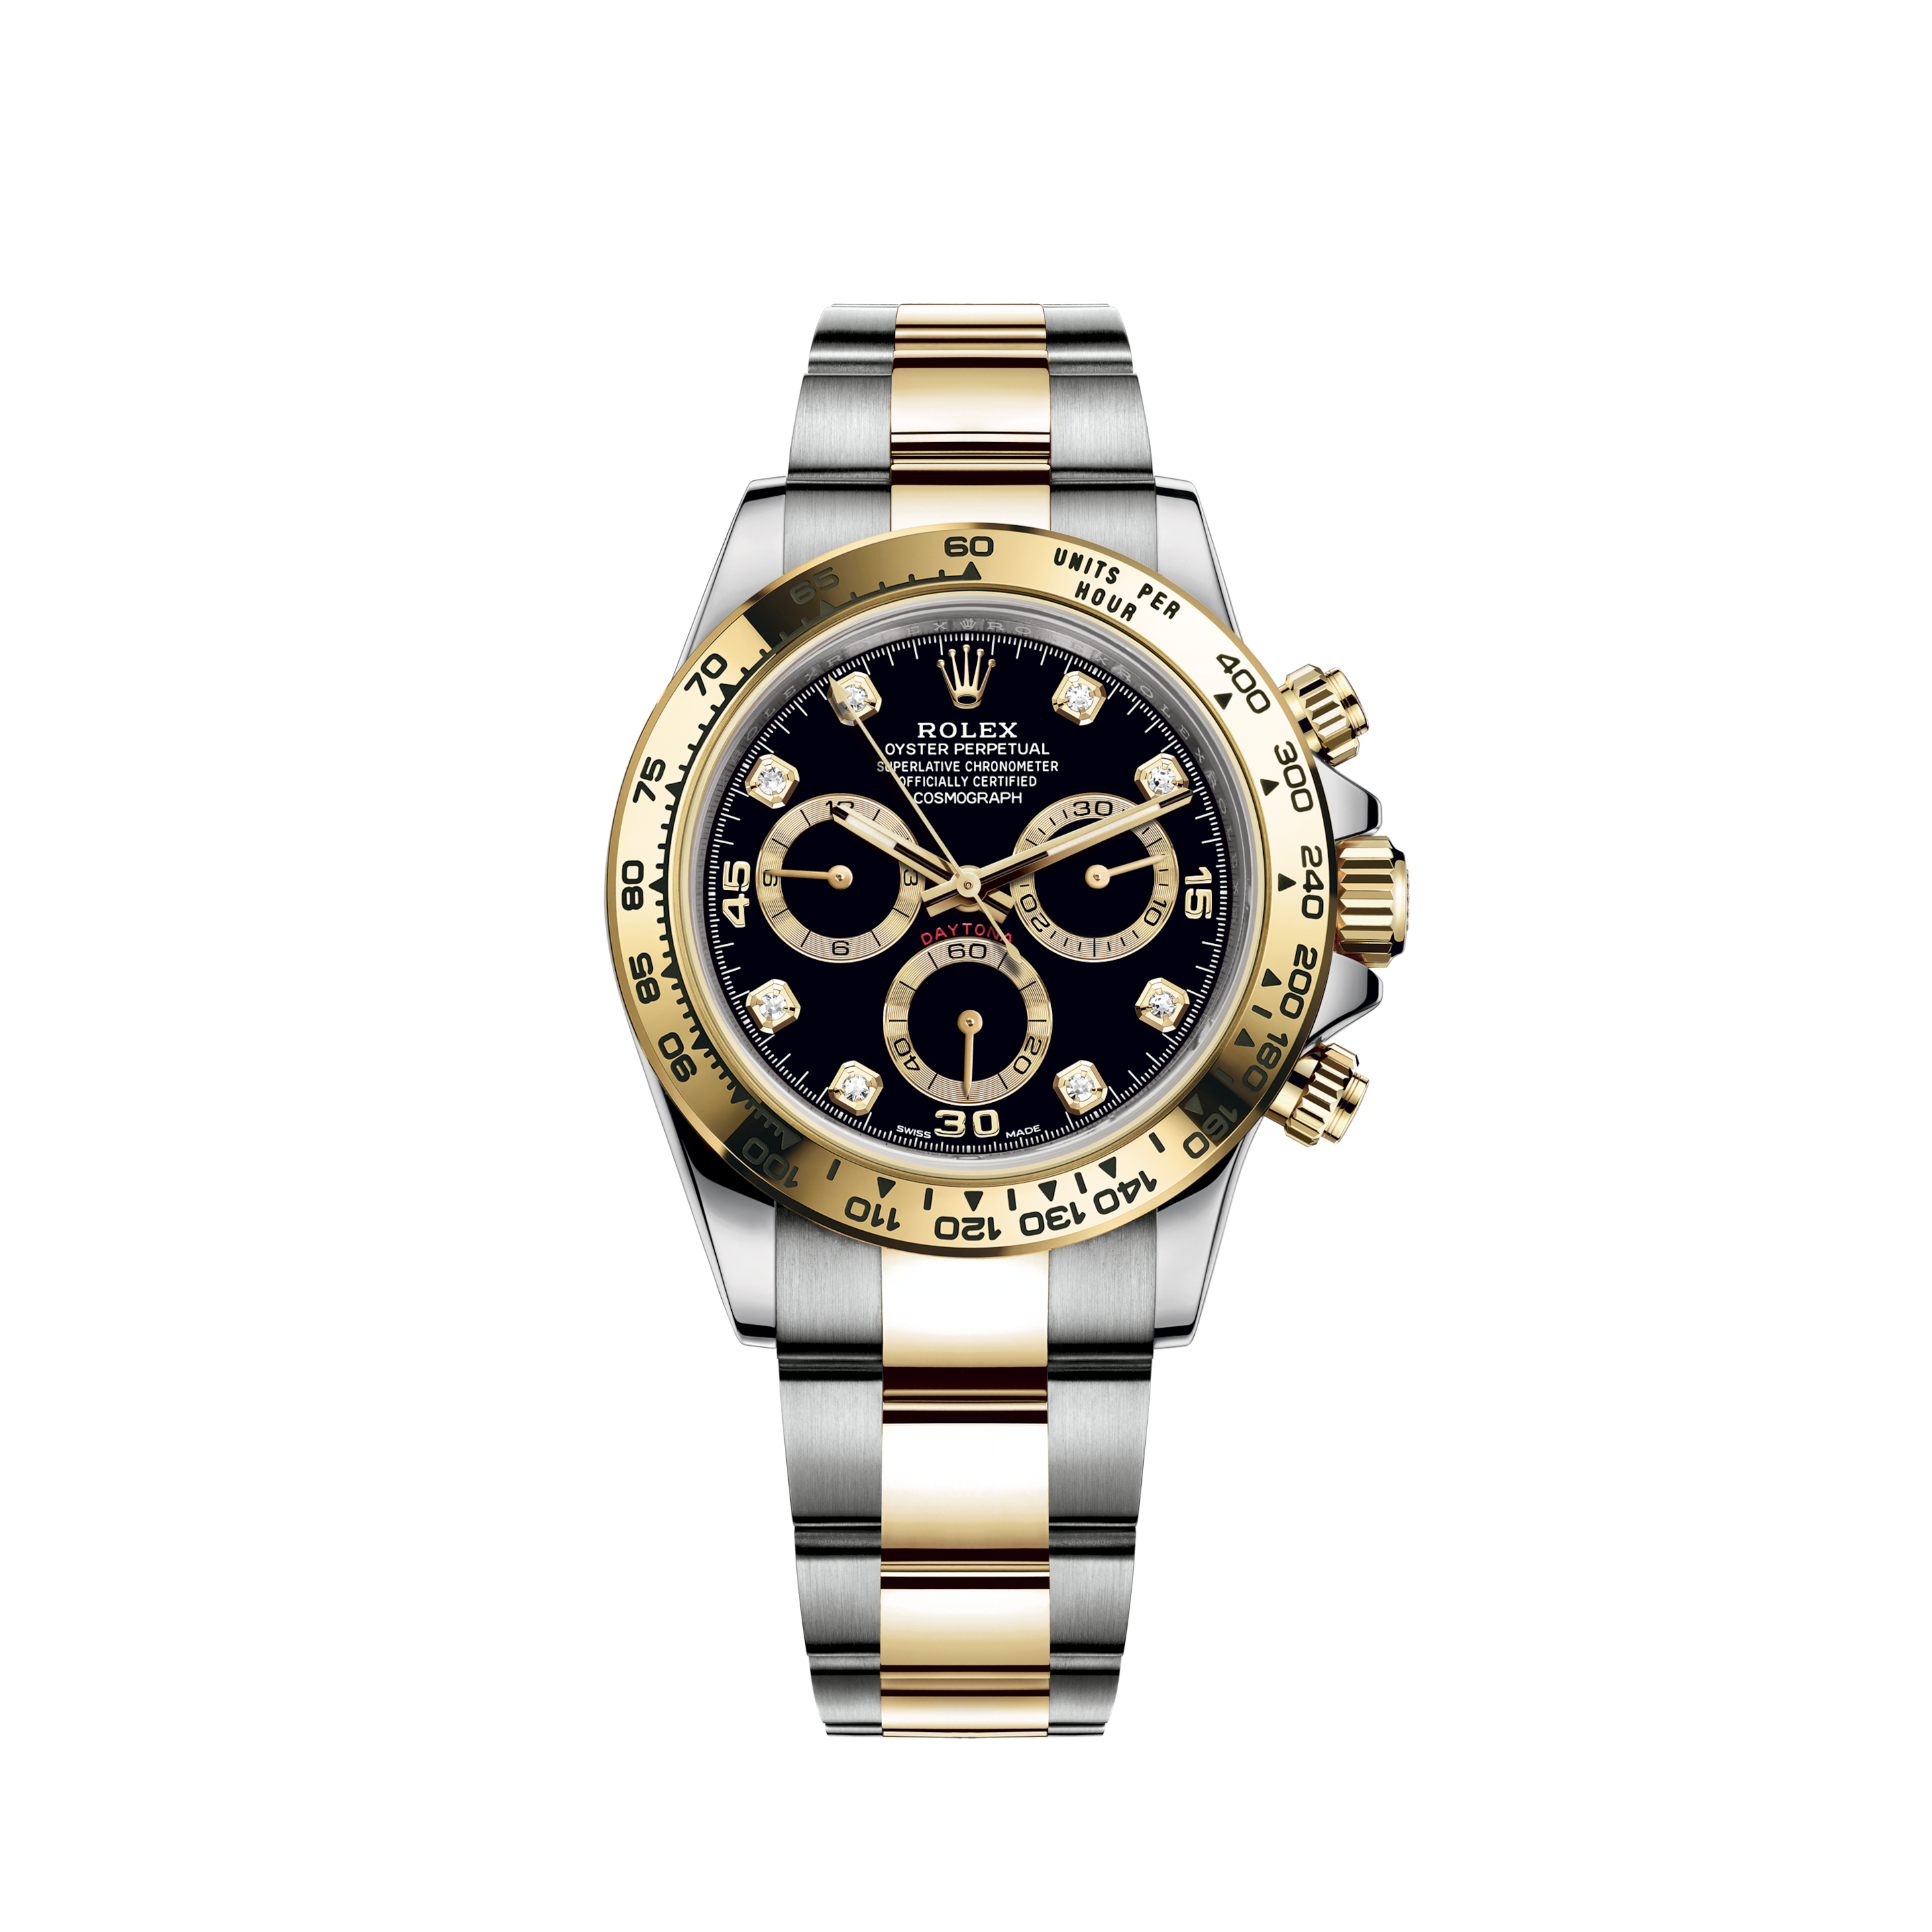 Rolex Datejust Wimbledon 41mm, Stainless Steel, 18k White Gold, Green Slate Roman Dial, 126334